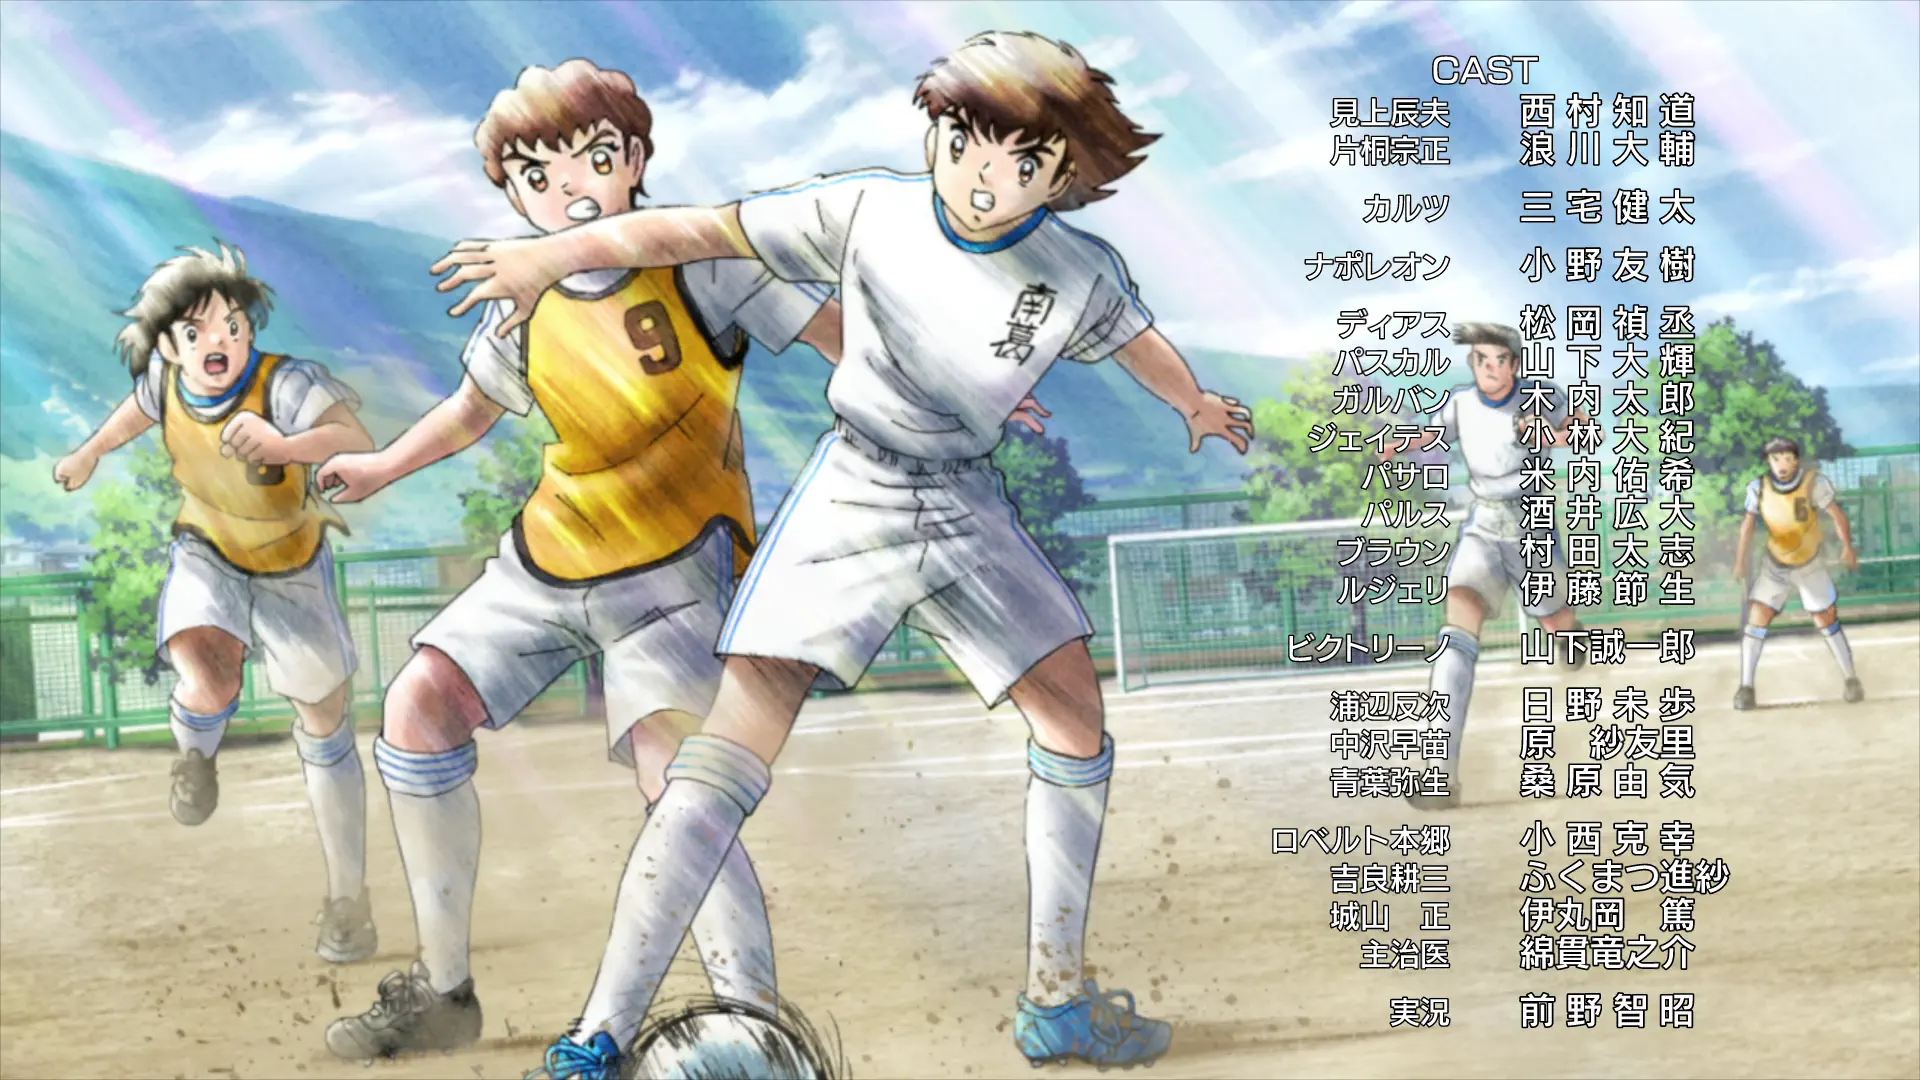 Captain Tsubasa Season 2: Junior Youth Hen - Episode 17 : The Young Noble of the Field Returns!!